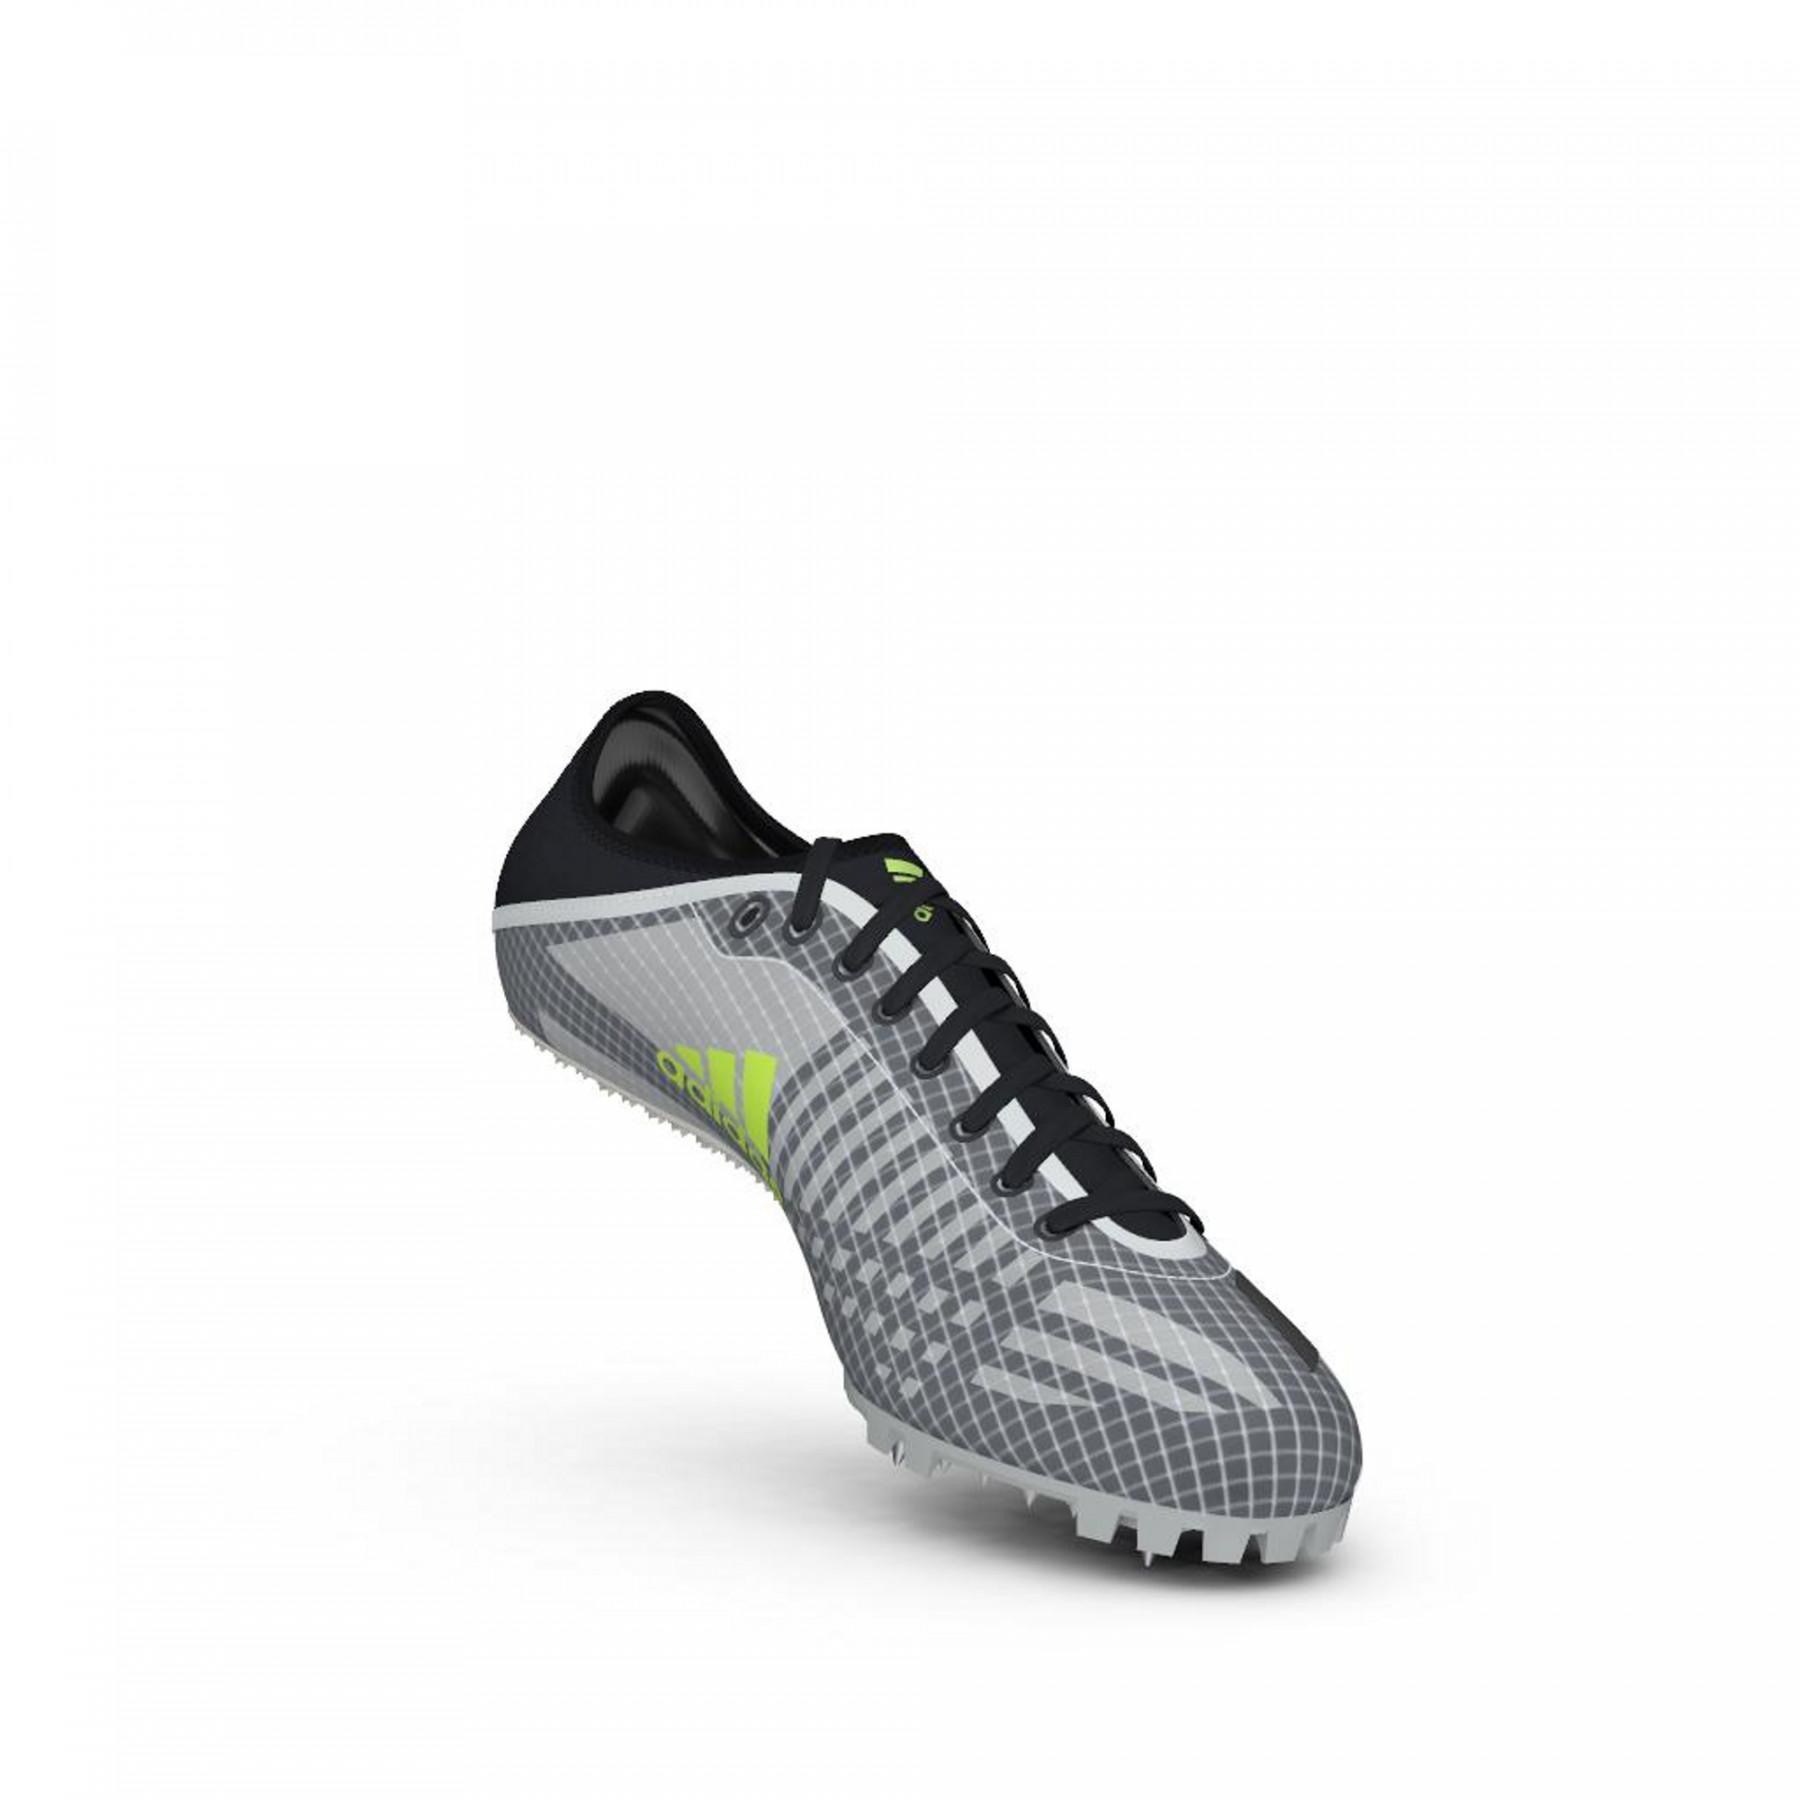 Shoes adidas Sprintstar Spikes